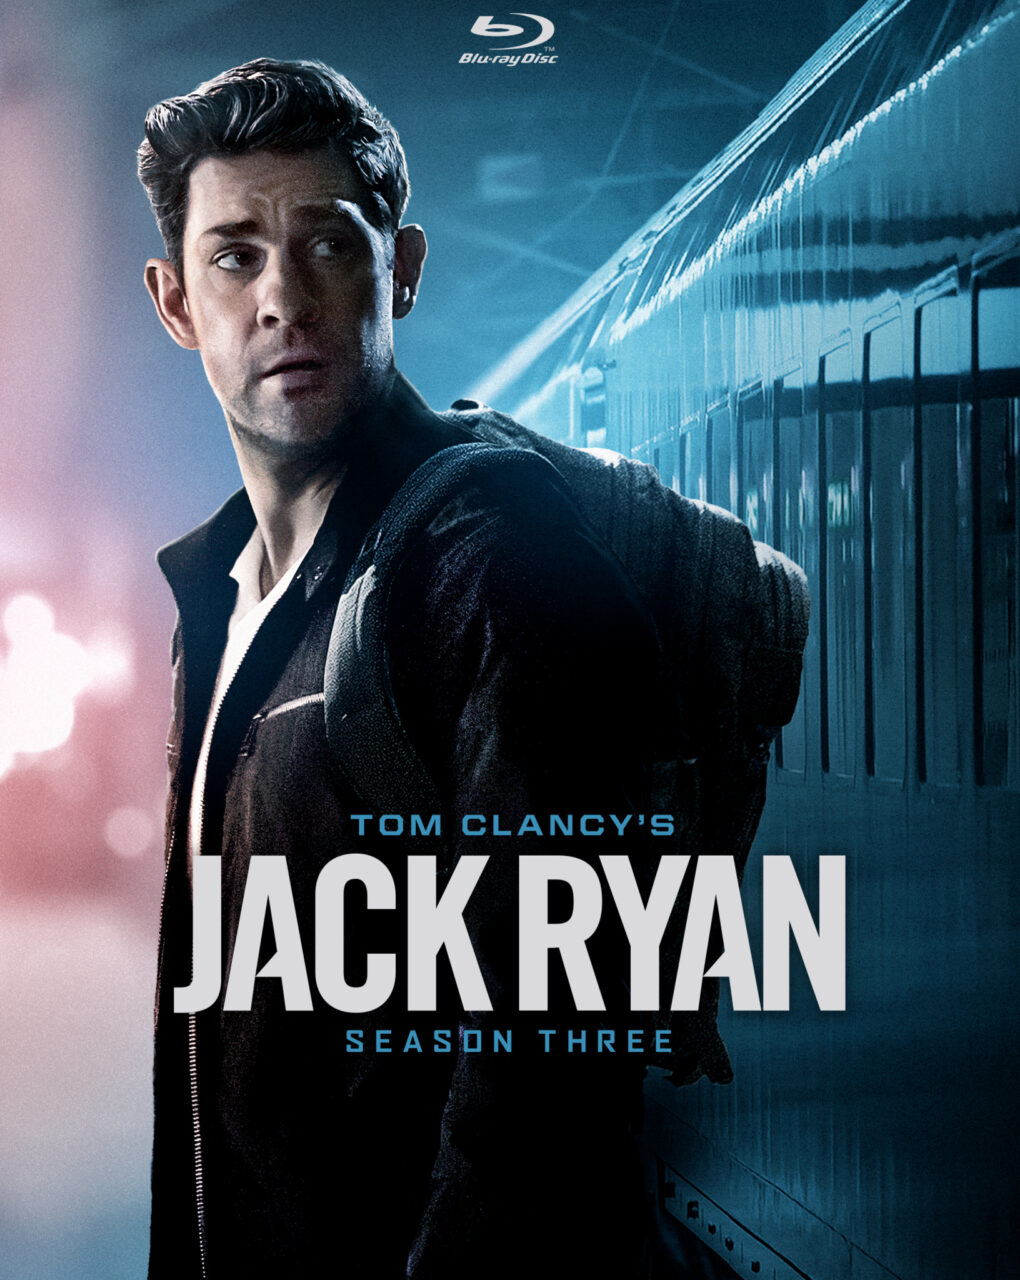 Tom Clancy's Jack Ryan: Season Three Blu-Ray cover (Paramount Home Entertainment)